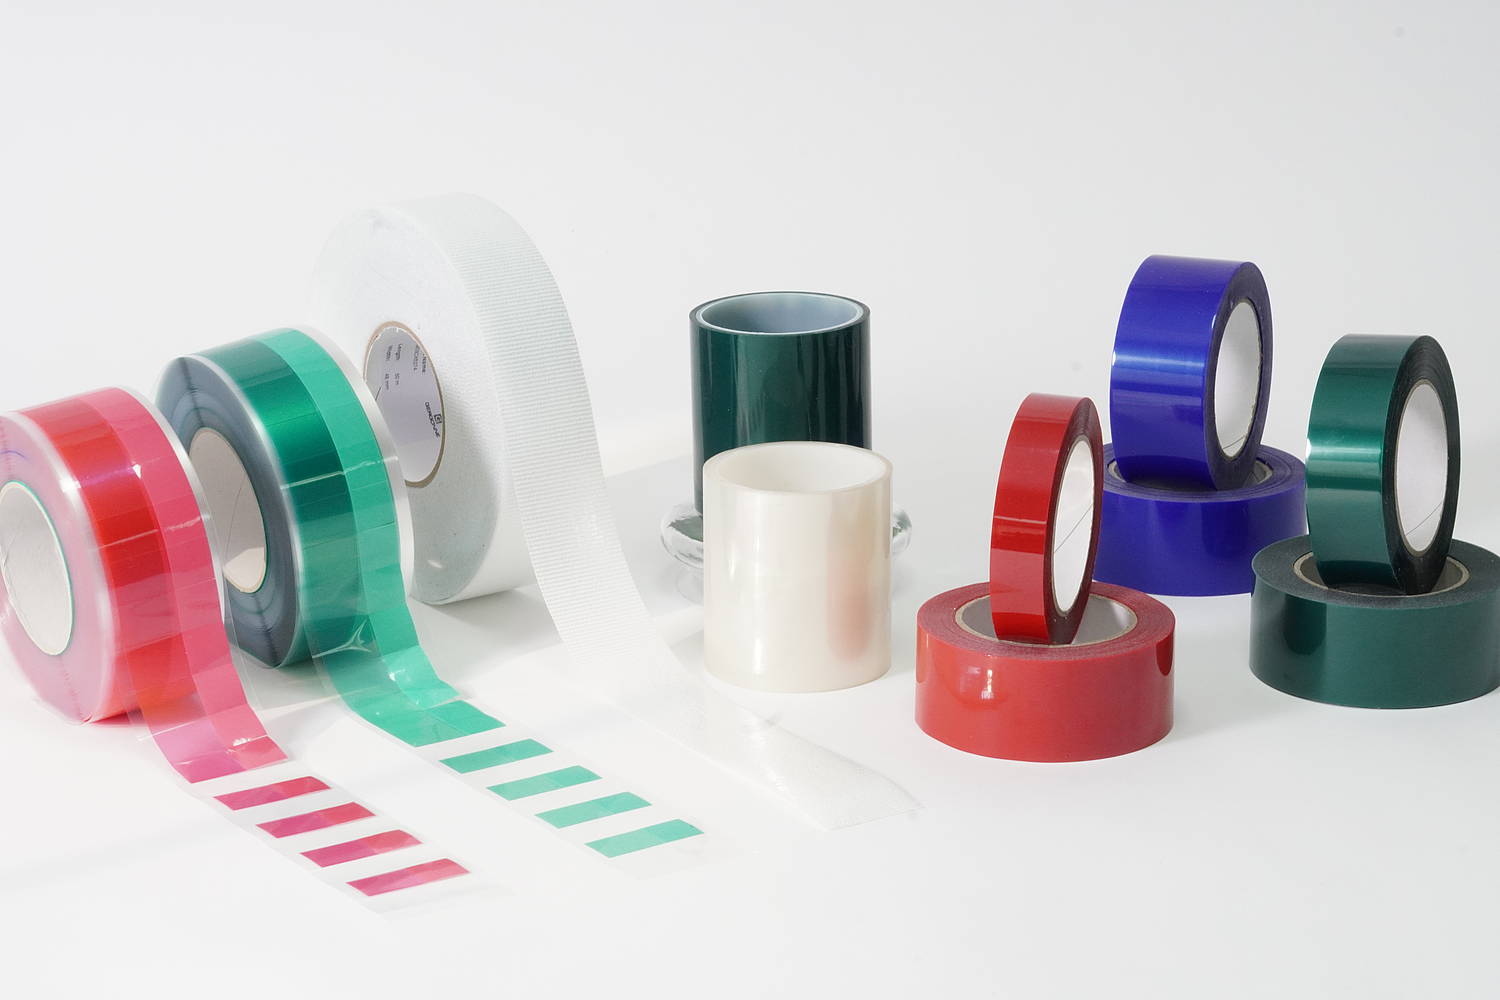 <ul><li>有机硅胶胶胶带方案:</li></ul>
- 卷料(单面硅胶胶带、单面背面硅化版和双面背面硅化版) 
- 易撕贴、剥离签 
- 整支胶带